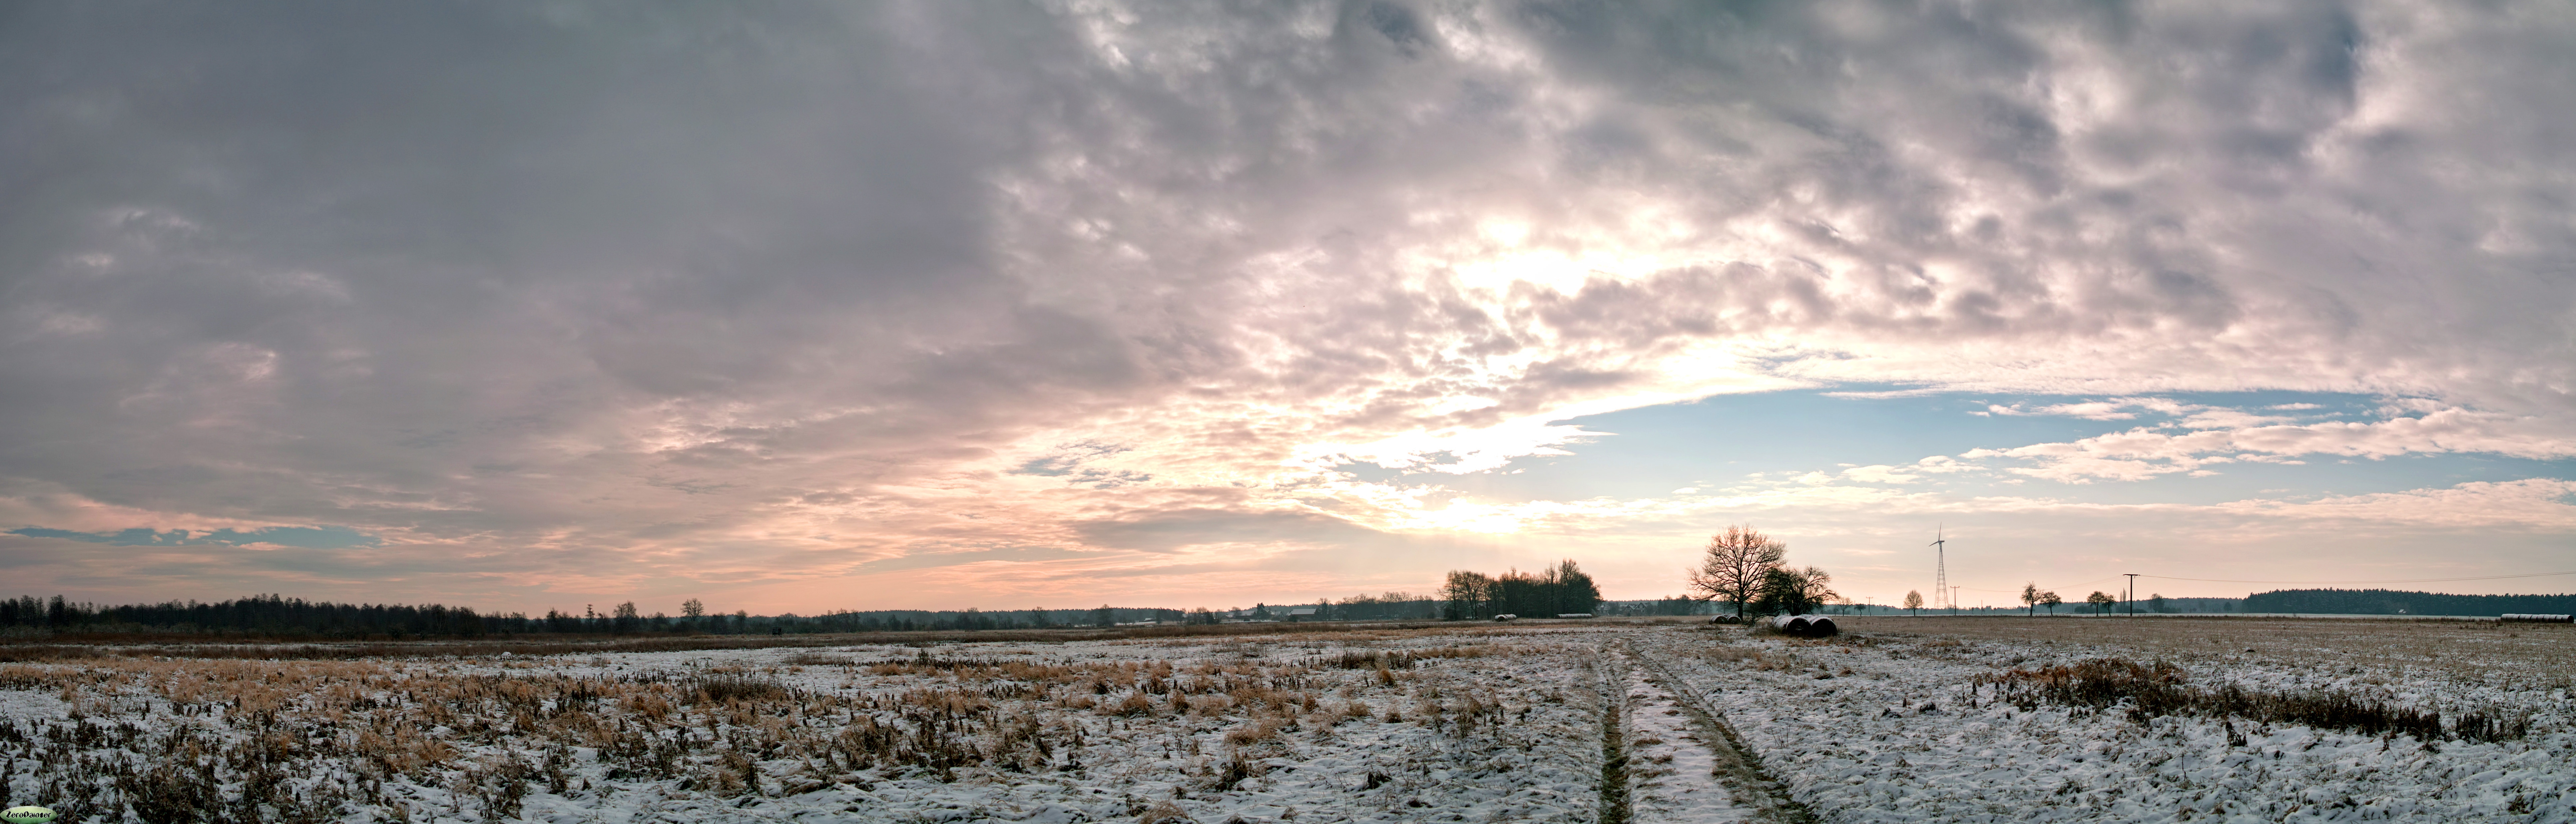 winter_panorama_by_zeropainter-d33xutb.jpg